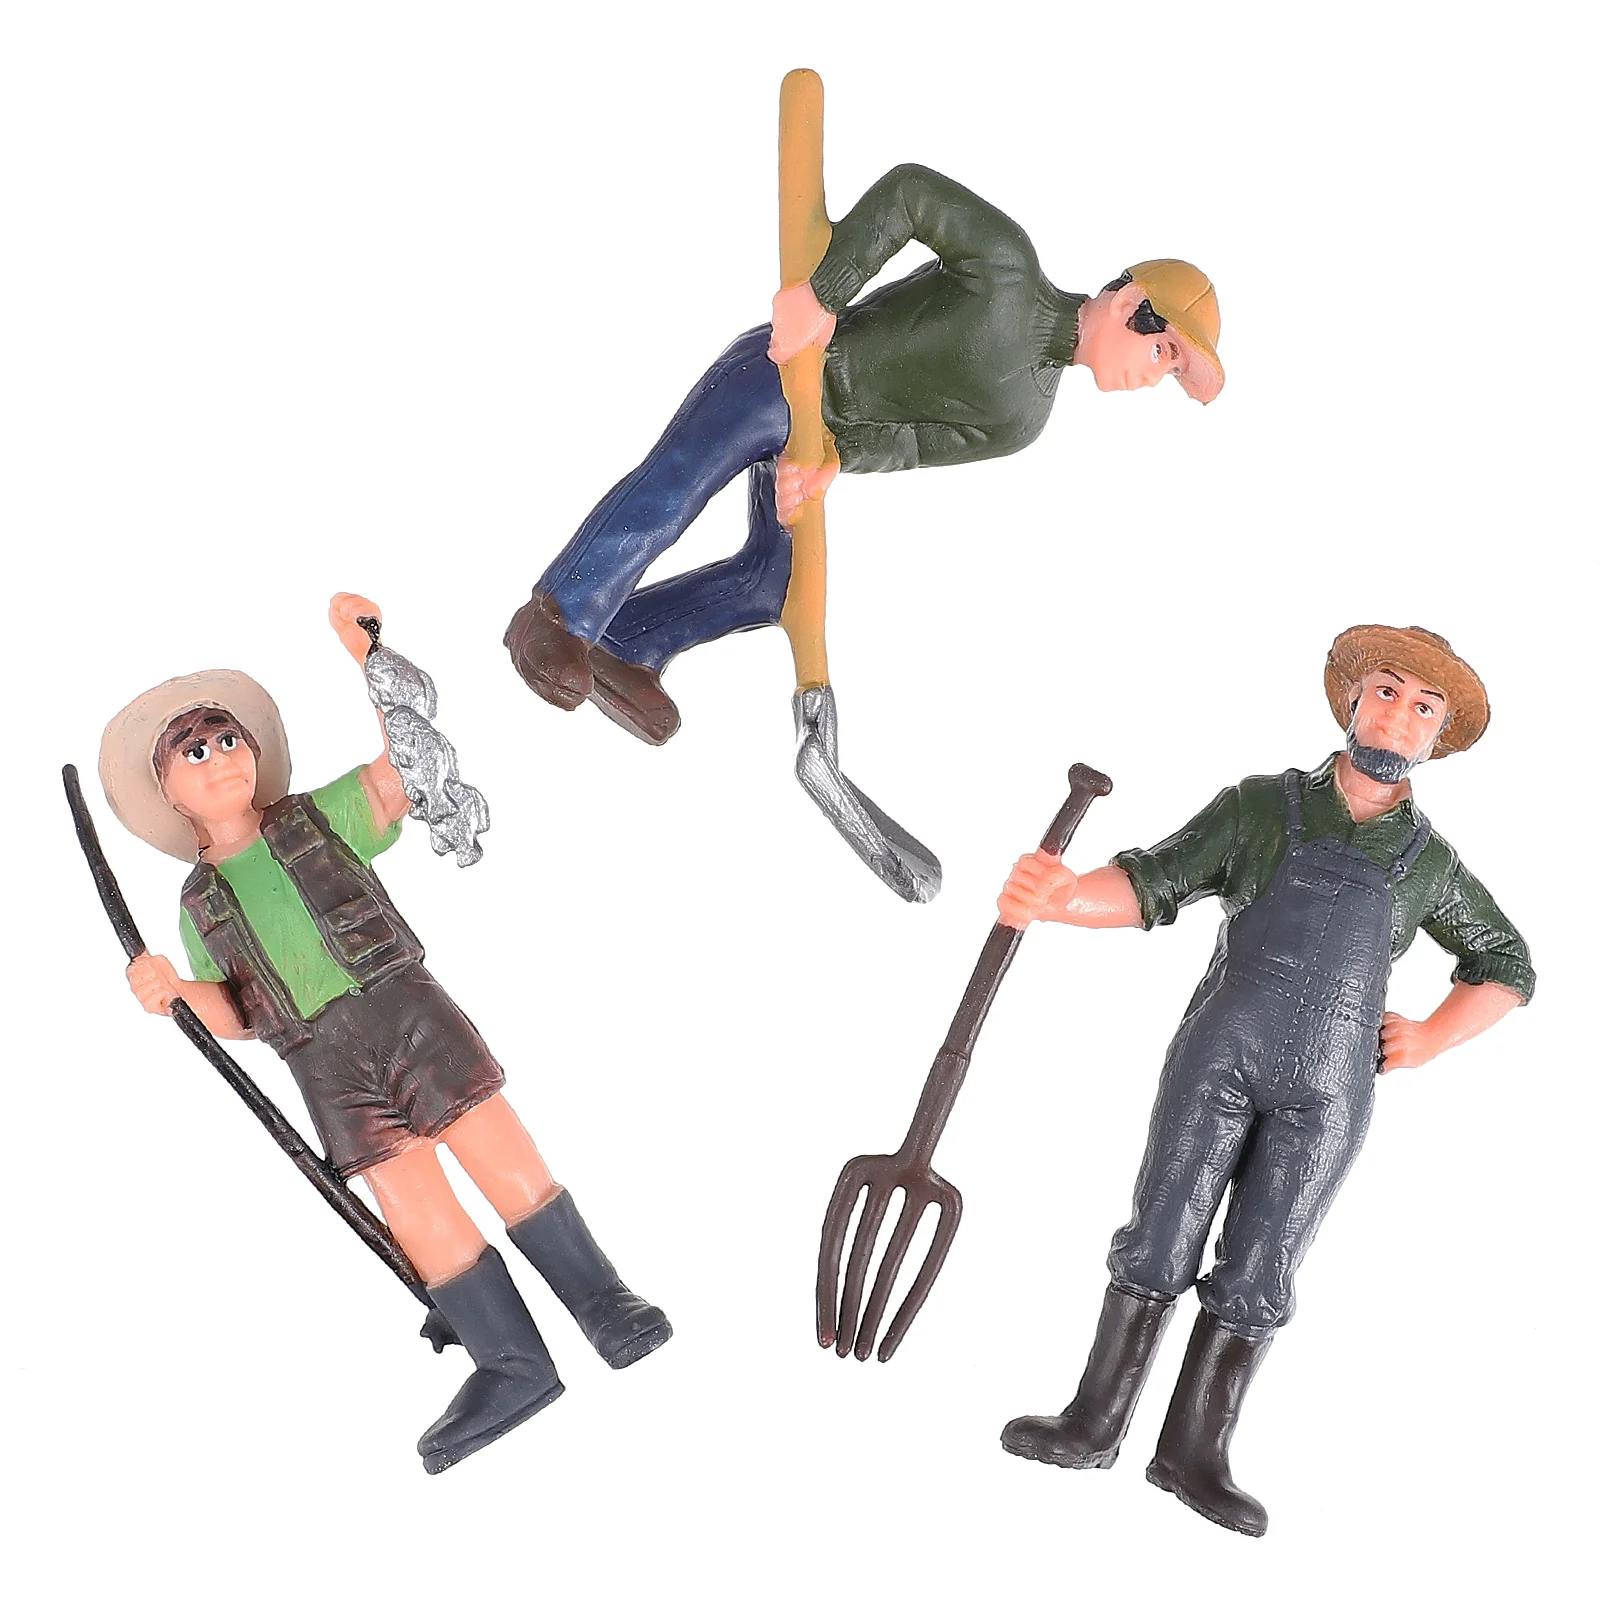 

3pcs Lifelike Farm Worker Model Figurines Dollhouse Mini People Figures Decor